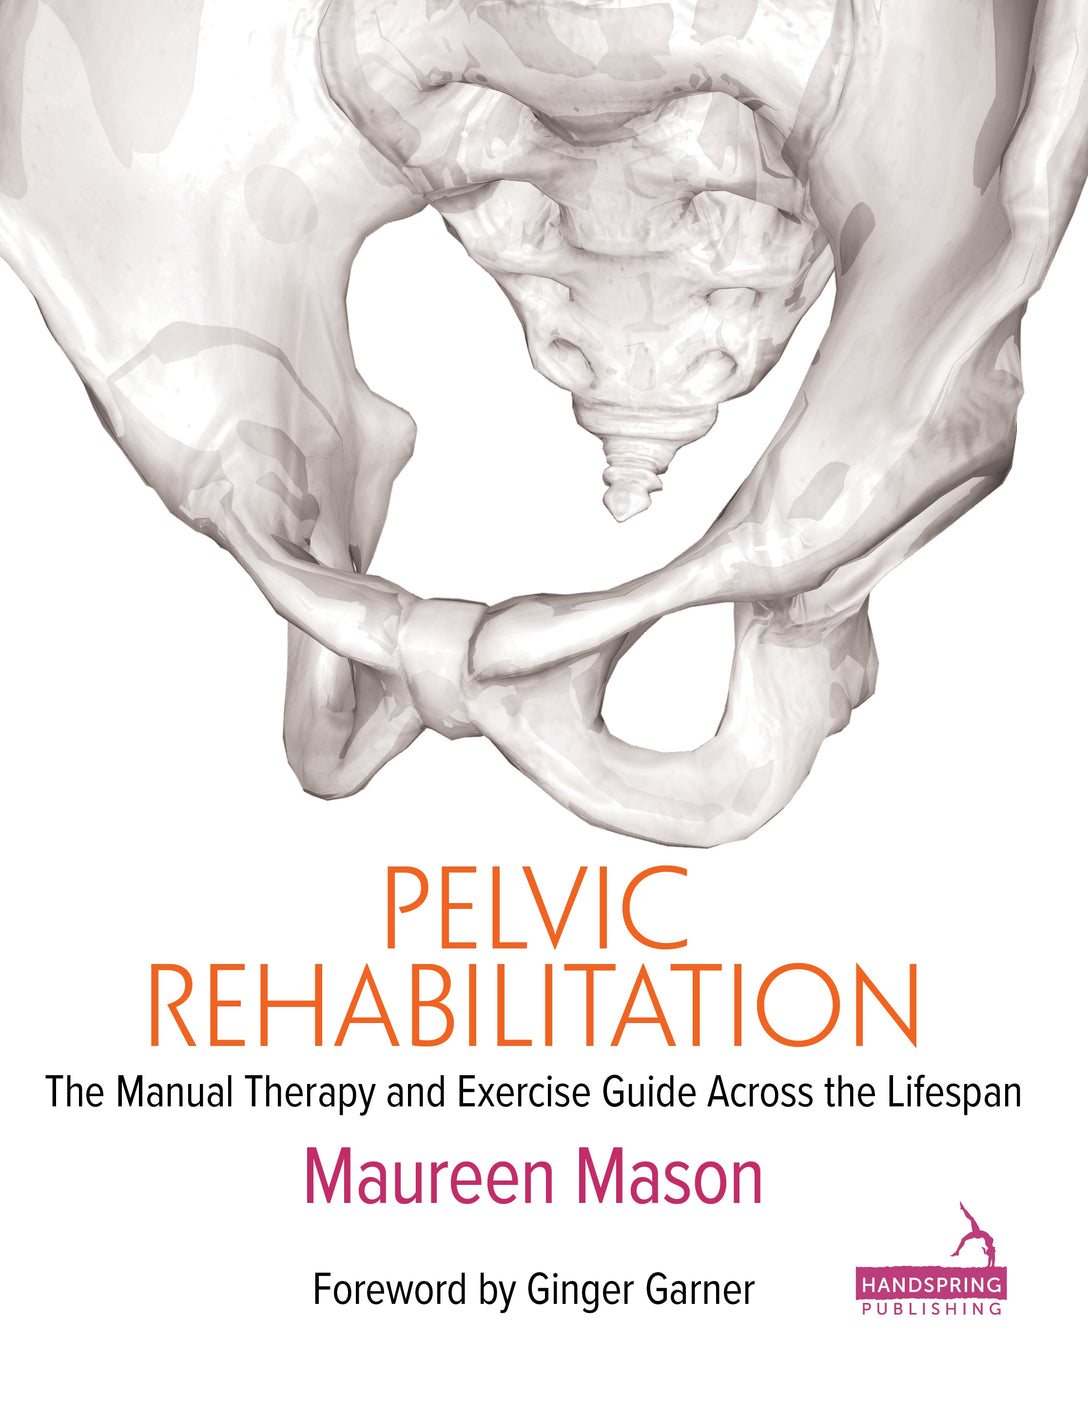 Pelvic Rehabilitation by Maureen Mason, Ginger Garner